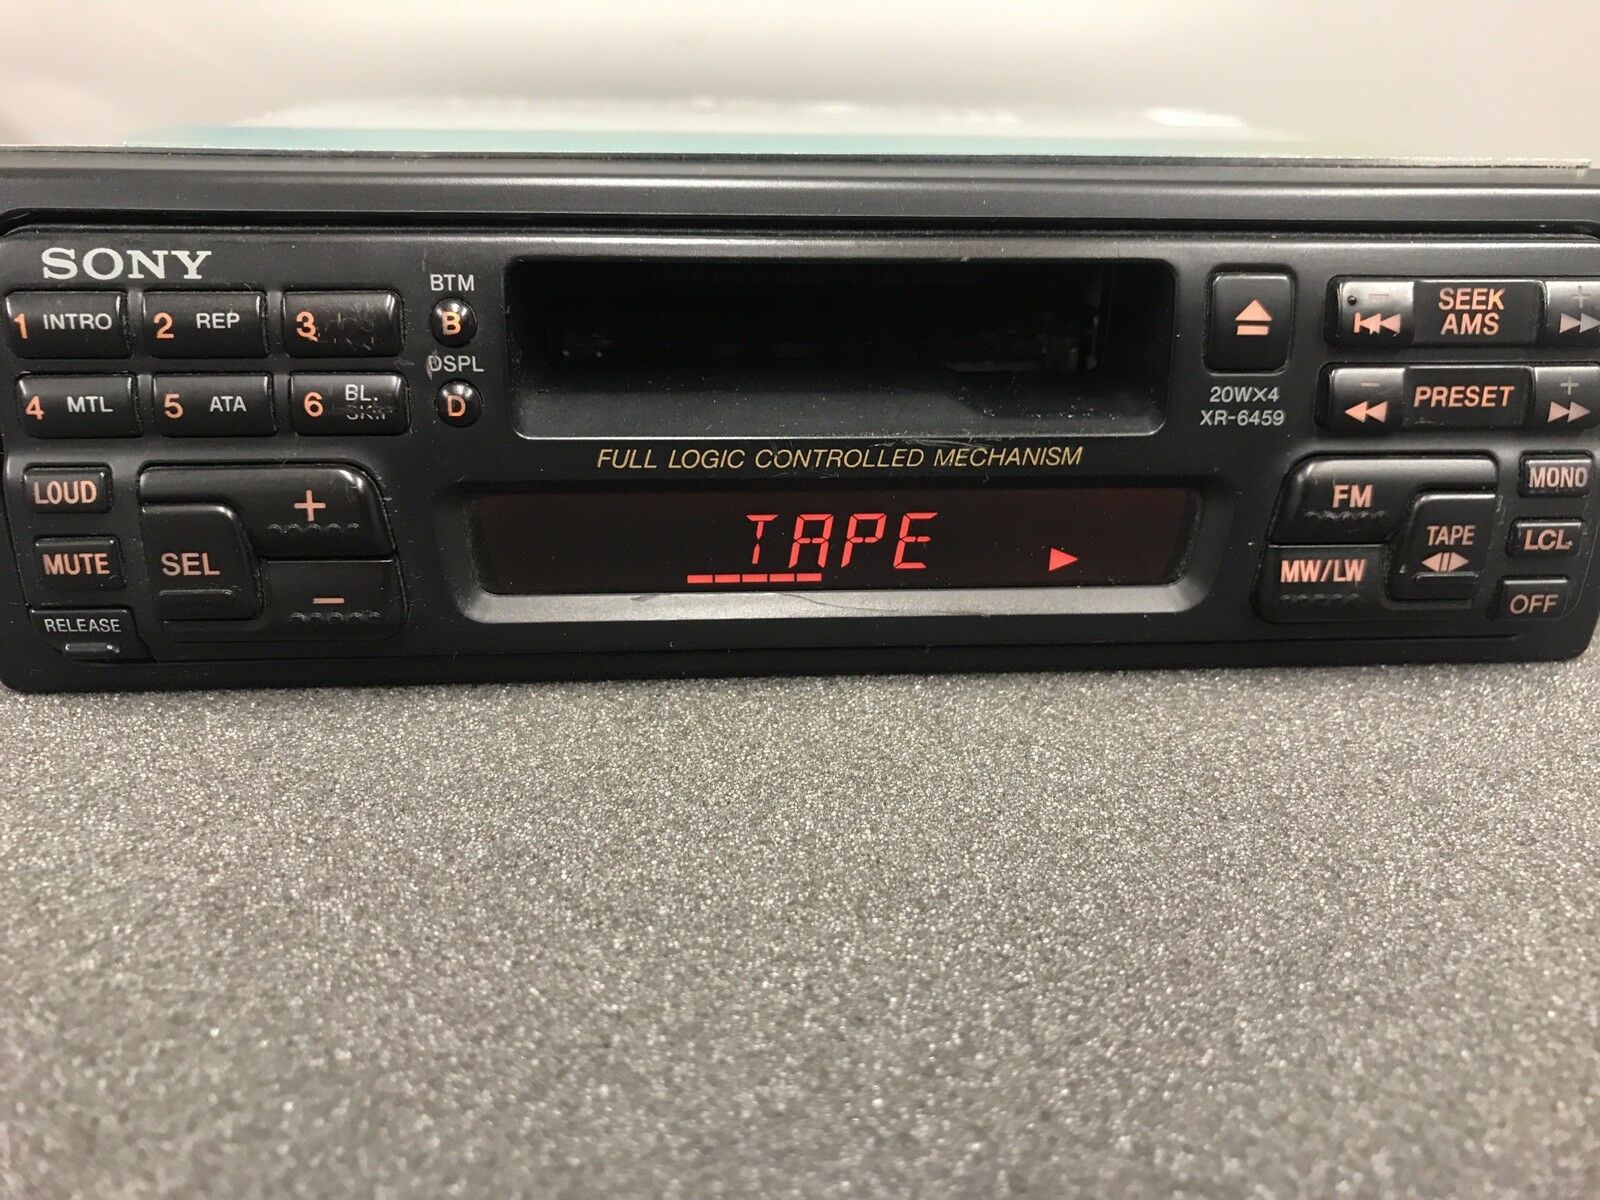 Old Sony Car Radio Stereo Cassette Player Model Xr-6459 Retro 90s Vintage Retro